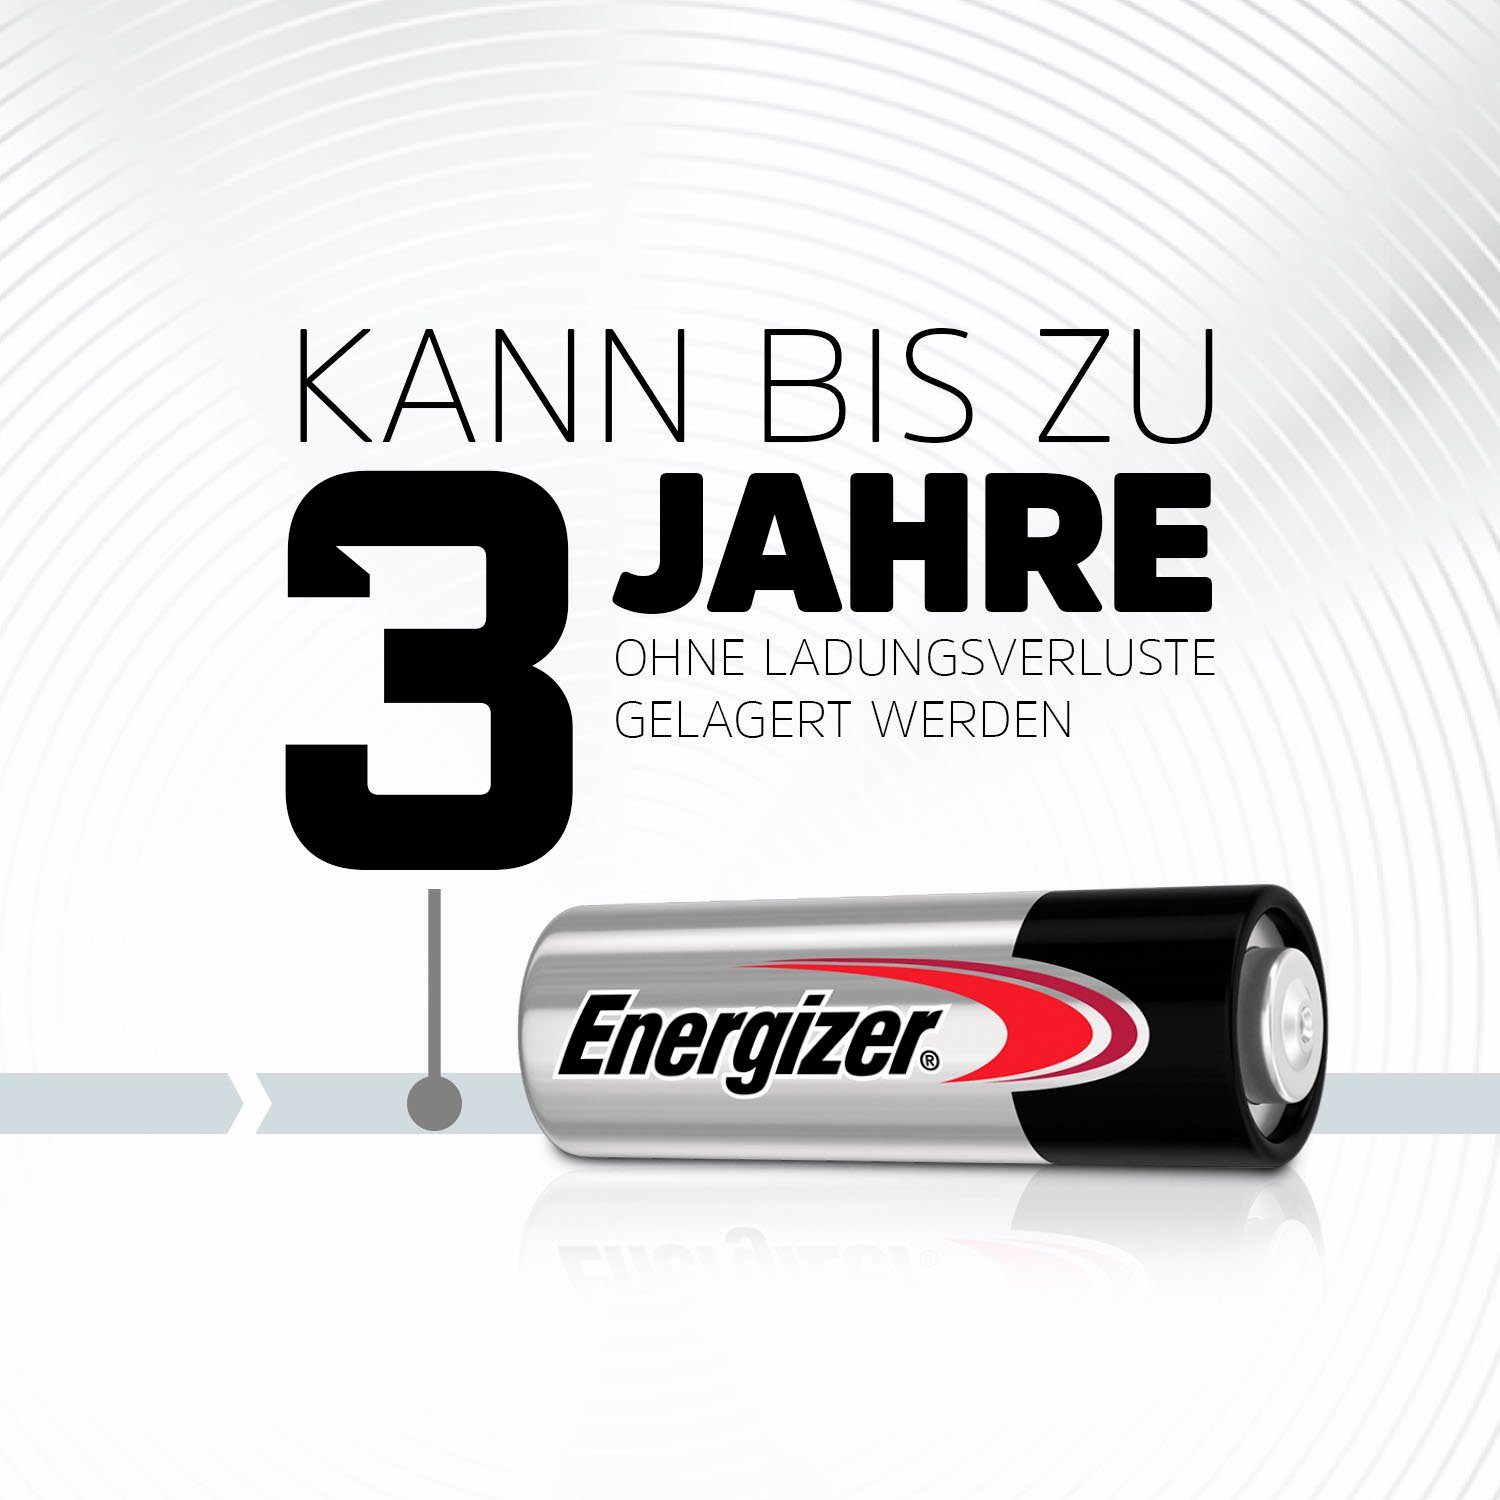 Energizer (1,5 Batterie, V, Alkali 2er LR1/E90 Mangan Pack St) 2